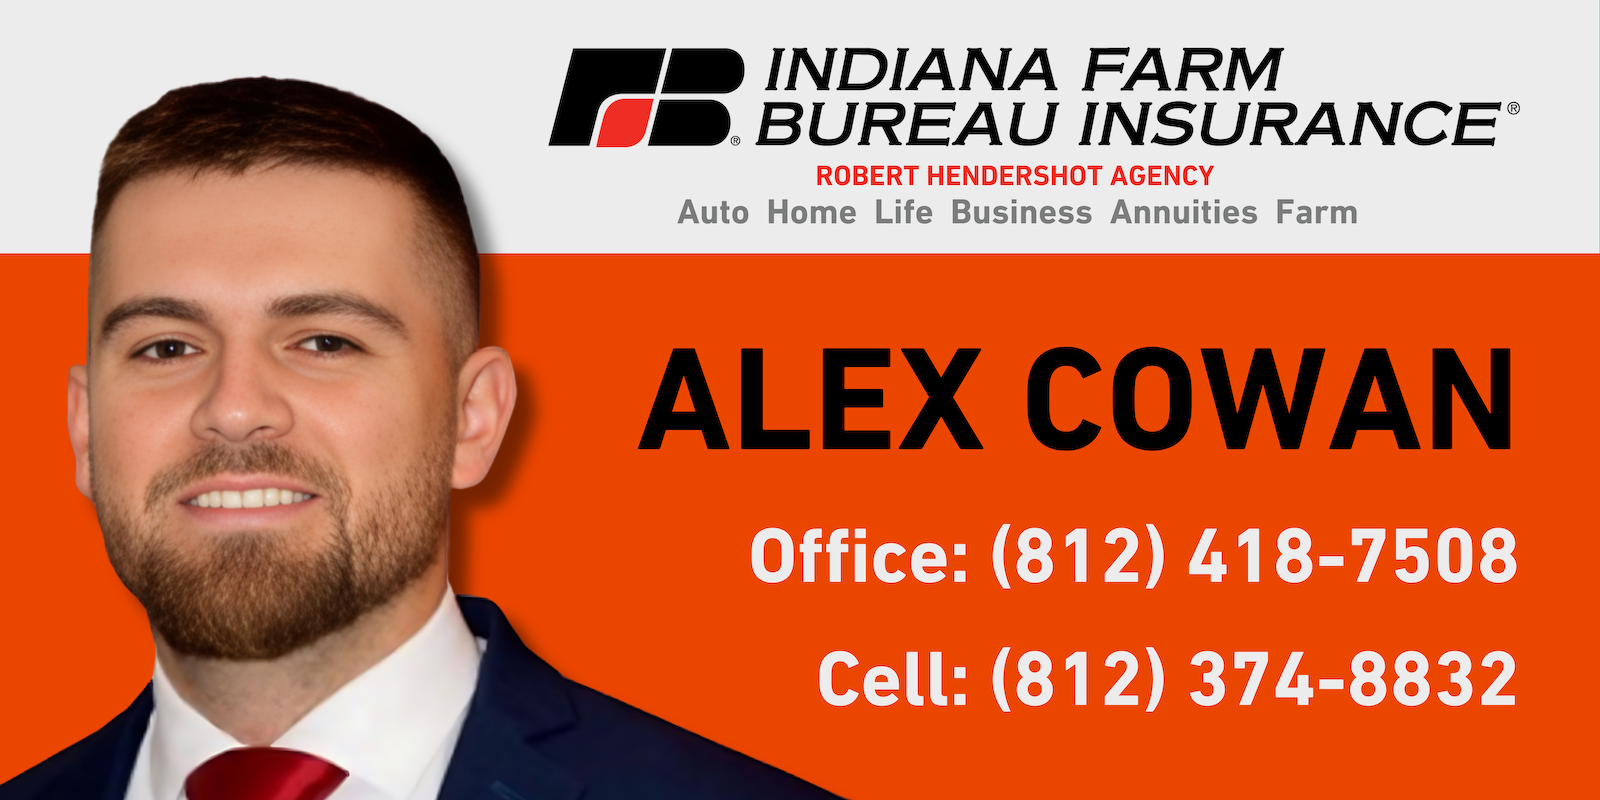 Indiana Farm Bureau Insurance - Alex Cowan